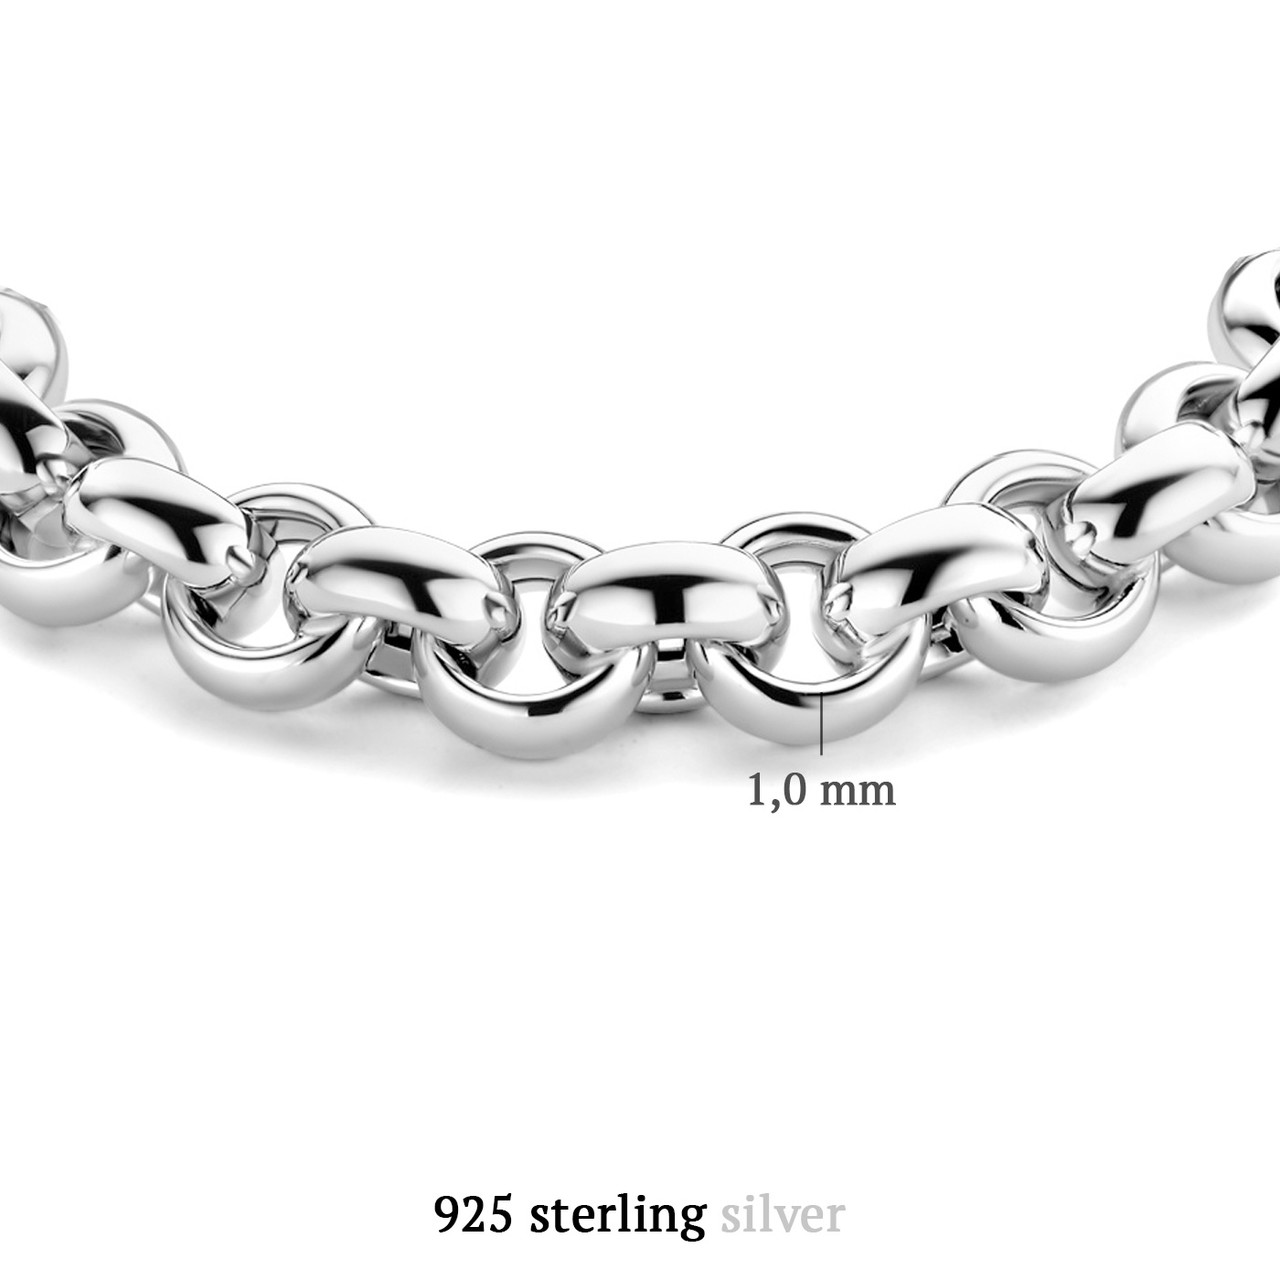 Di Me sterling silver Parte - PDM32011 link 925 bracelet